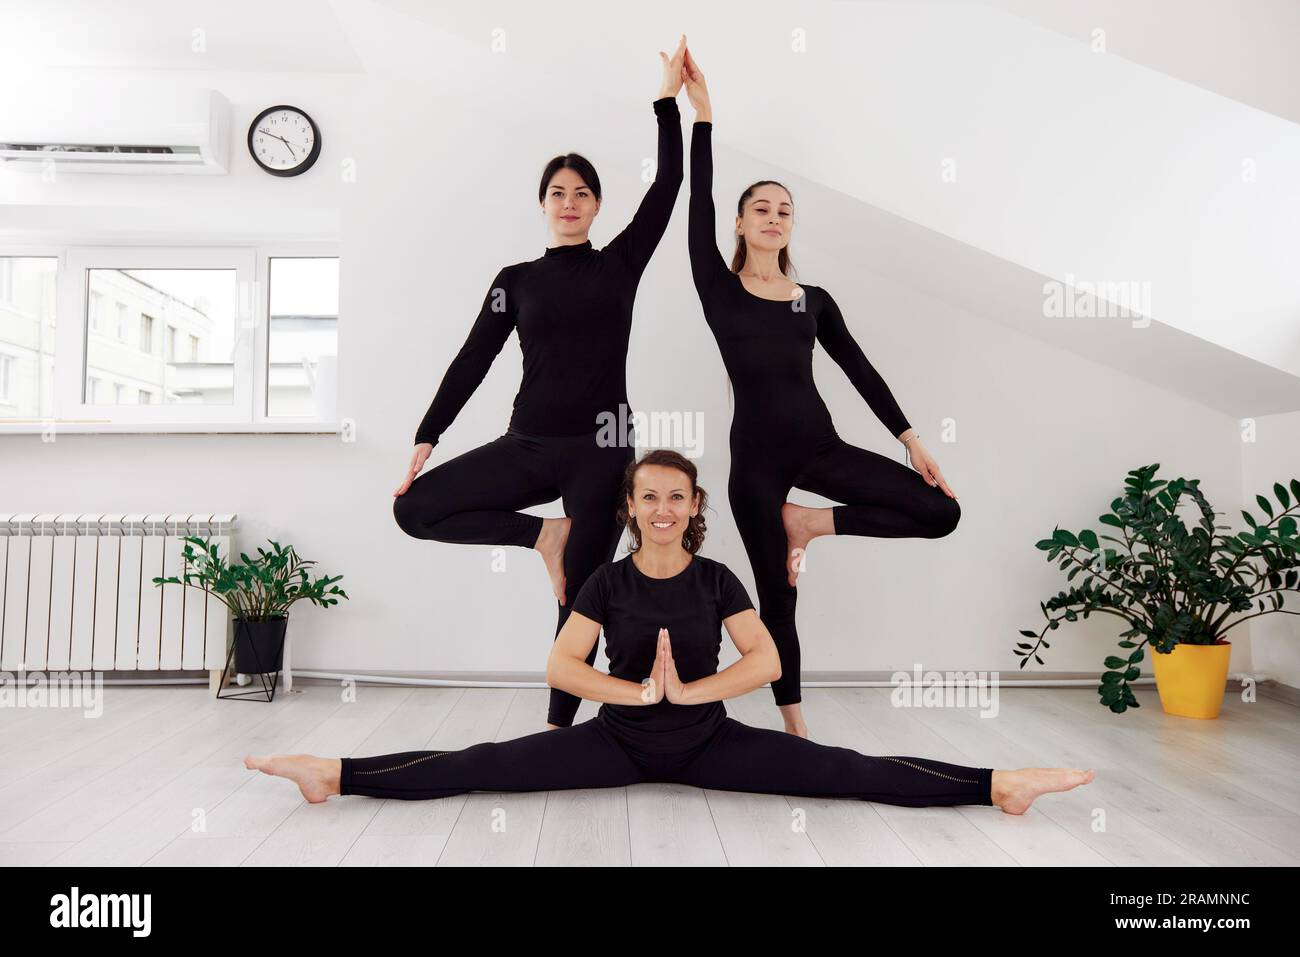 yoga poses – yoga poses for three people